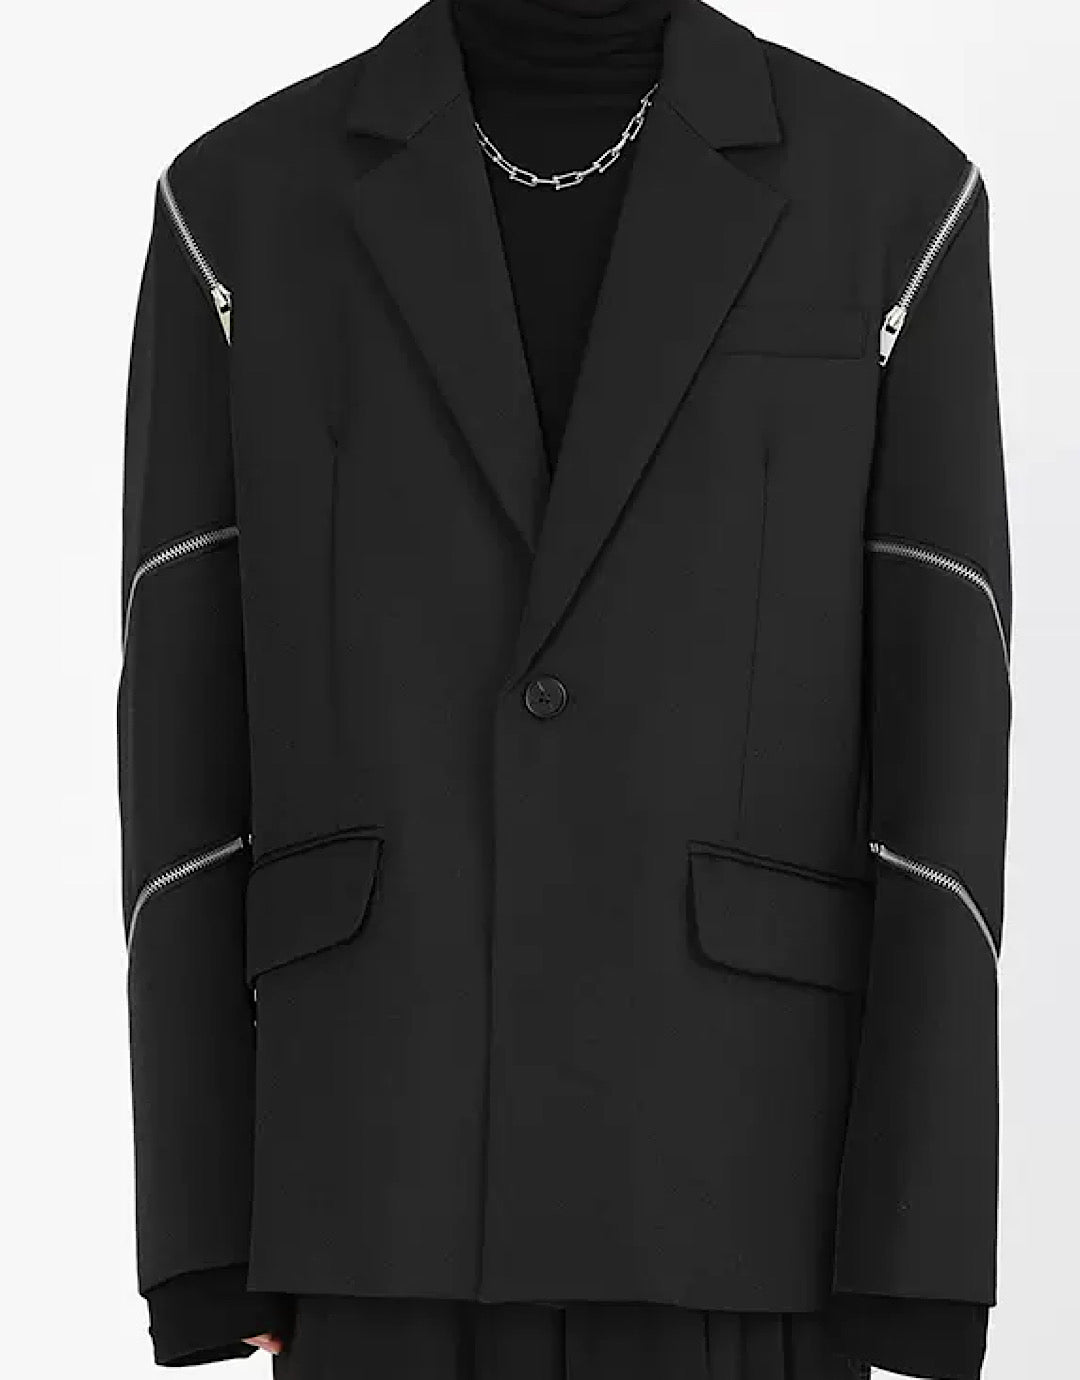 【BOB】Overall Zipper Modewide Jacket BO0001